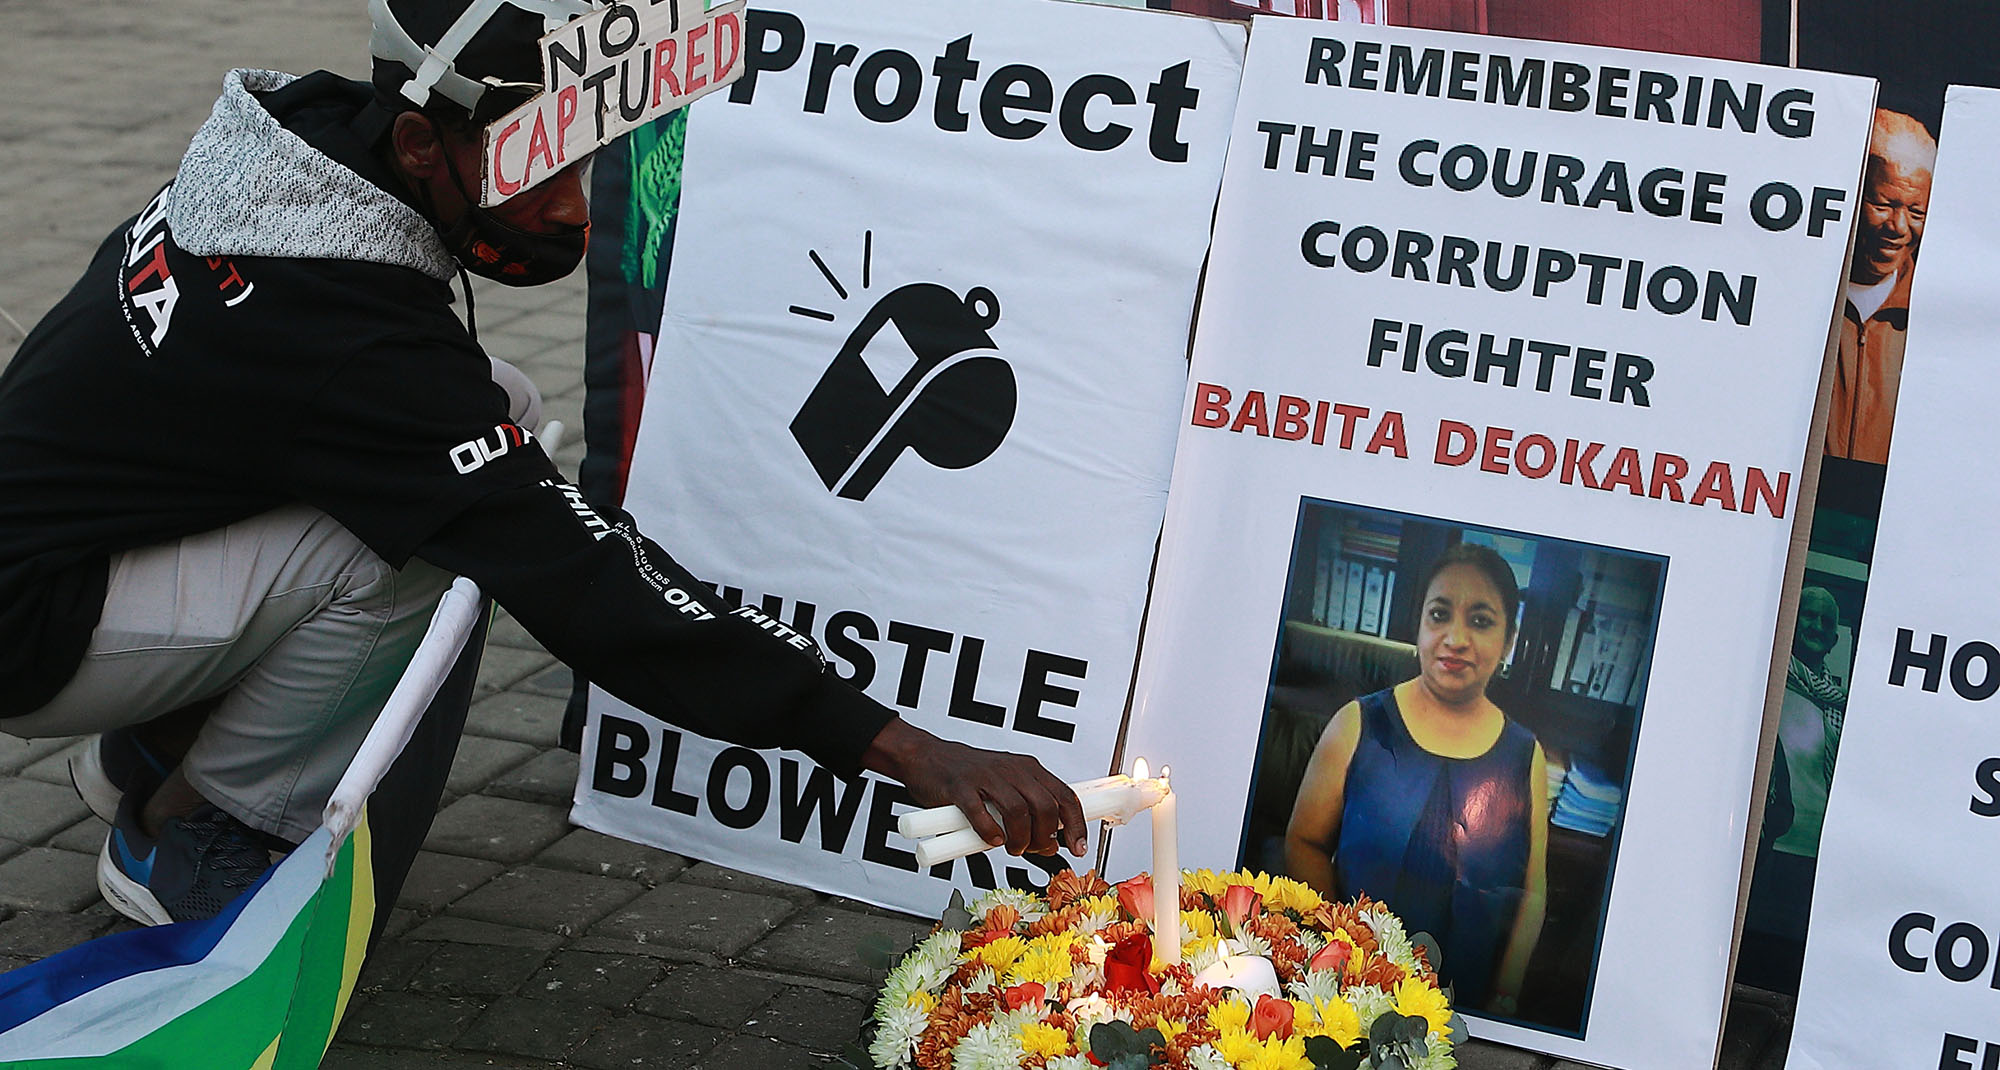 A candlelight vigil for corruption whistle-blower Babita Deokaran